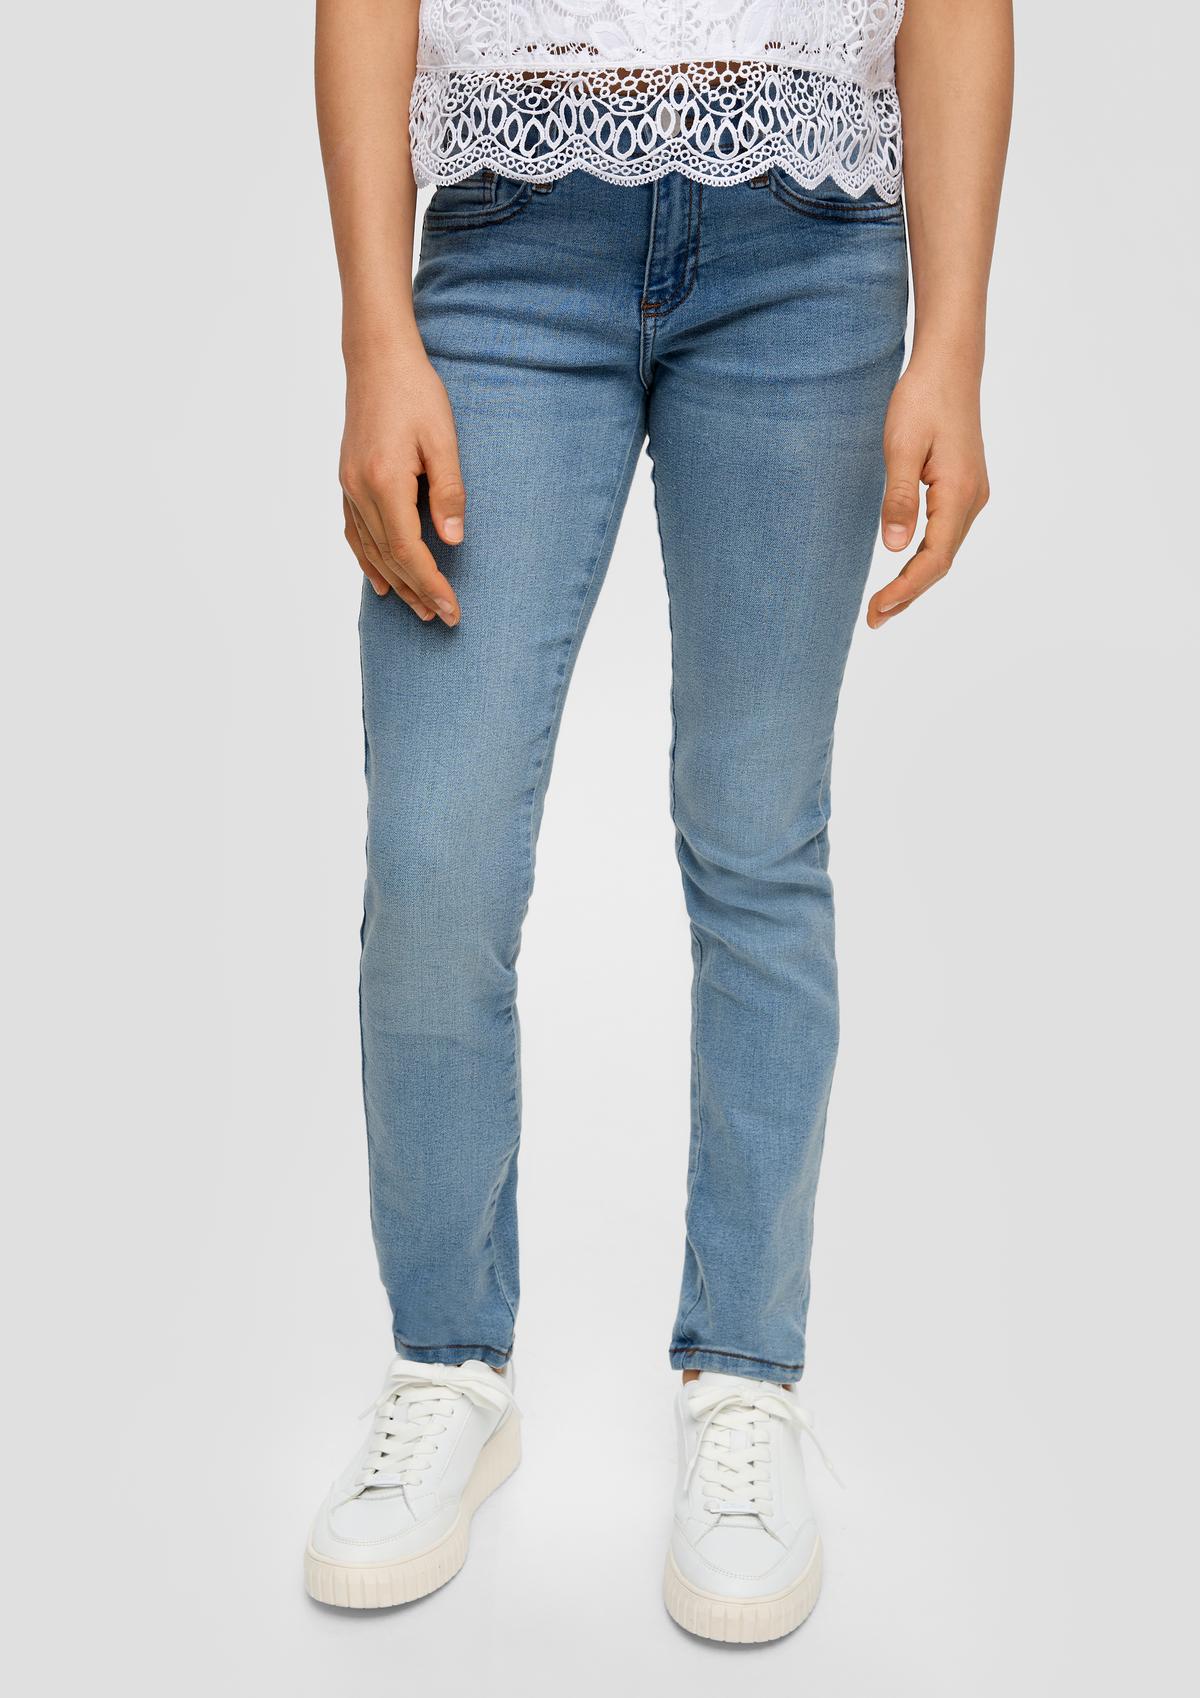 Jeans Suri / Regular Fit / Mid Rise / Slim Leg